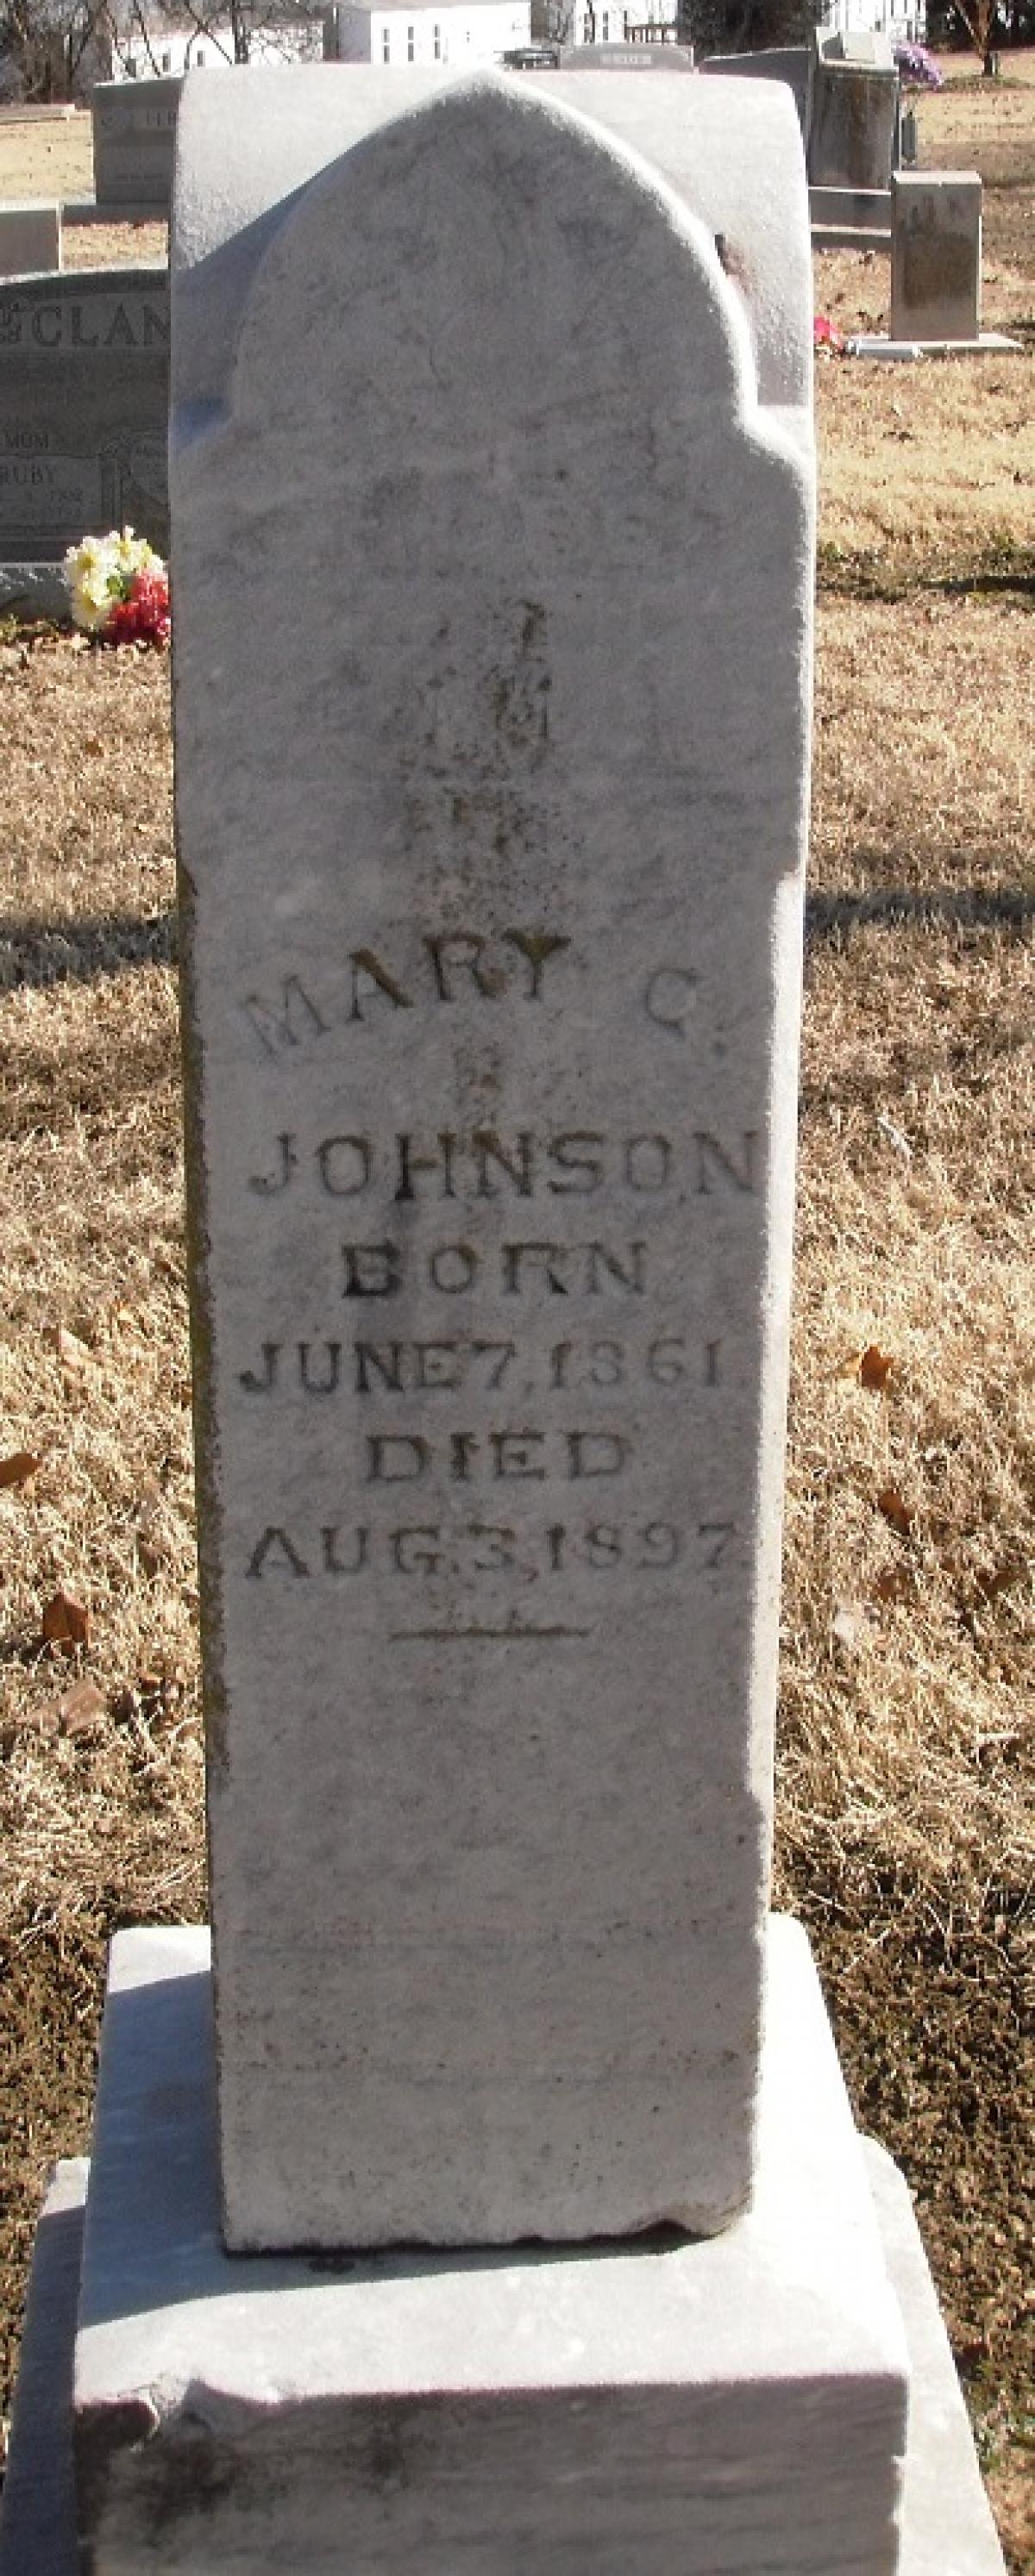 OK, Grove, Buzzard Cemetery, Johnson, Mary C. Headstone